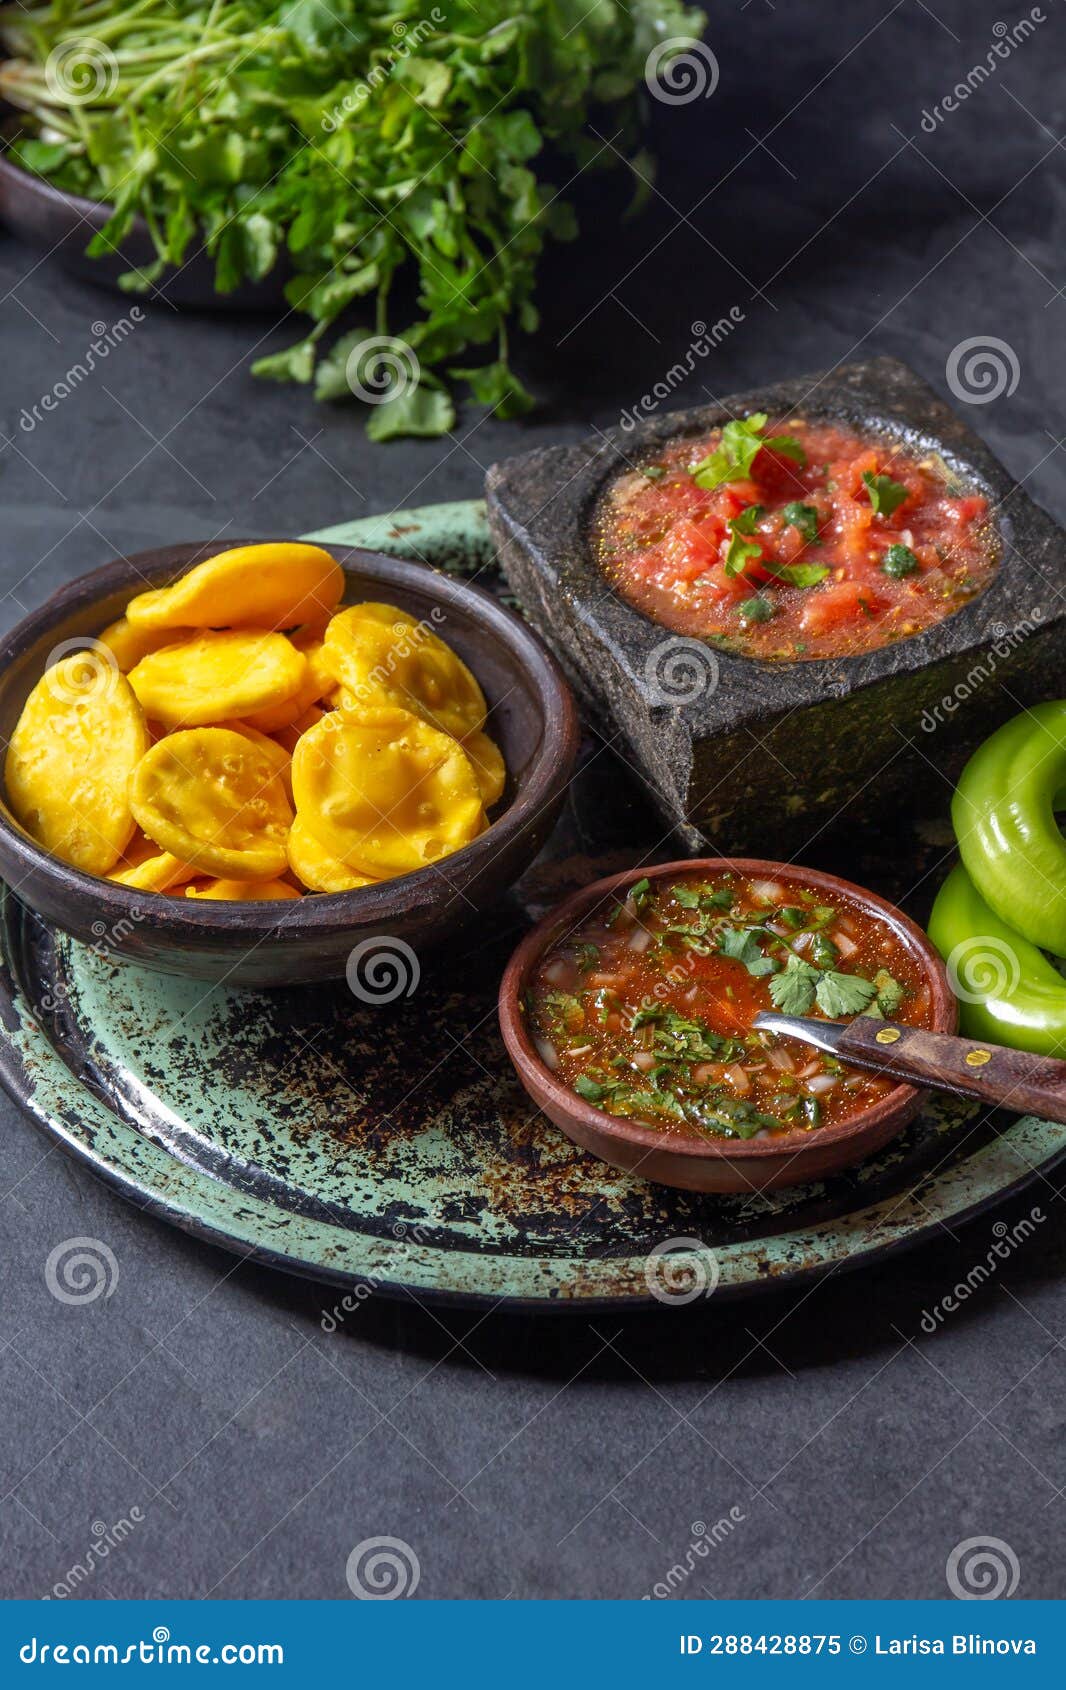 sopaipilla. latin american food. traditional chilean homemade pumpkin sopaipillas with typical salsas - chancho en